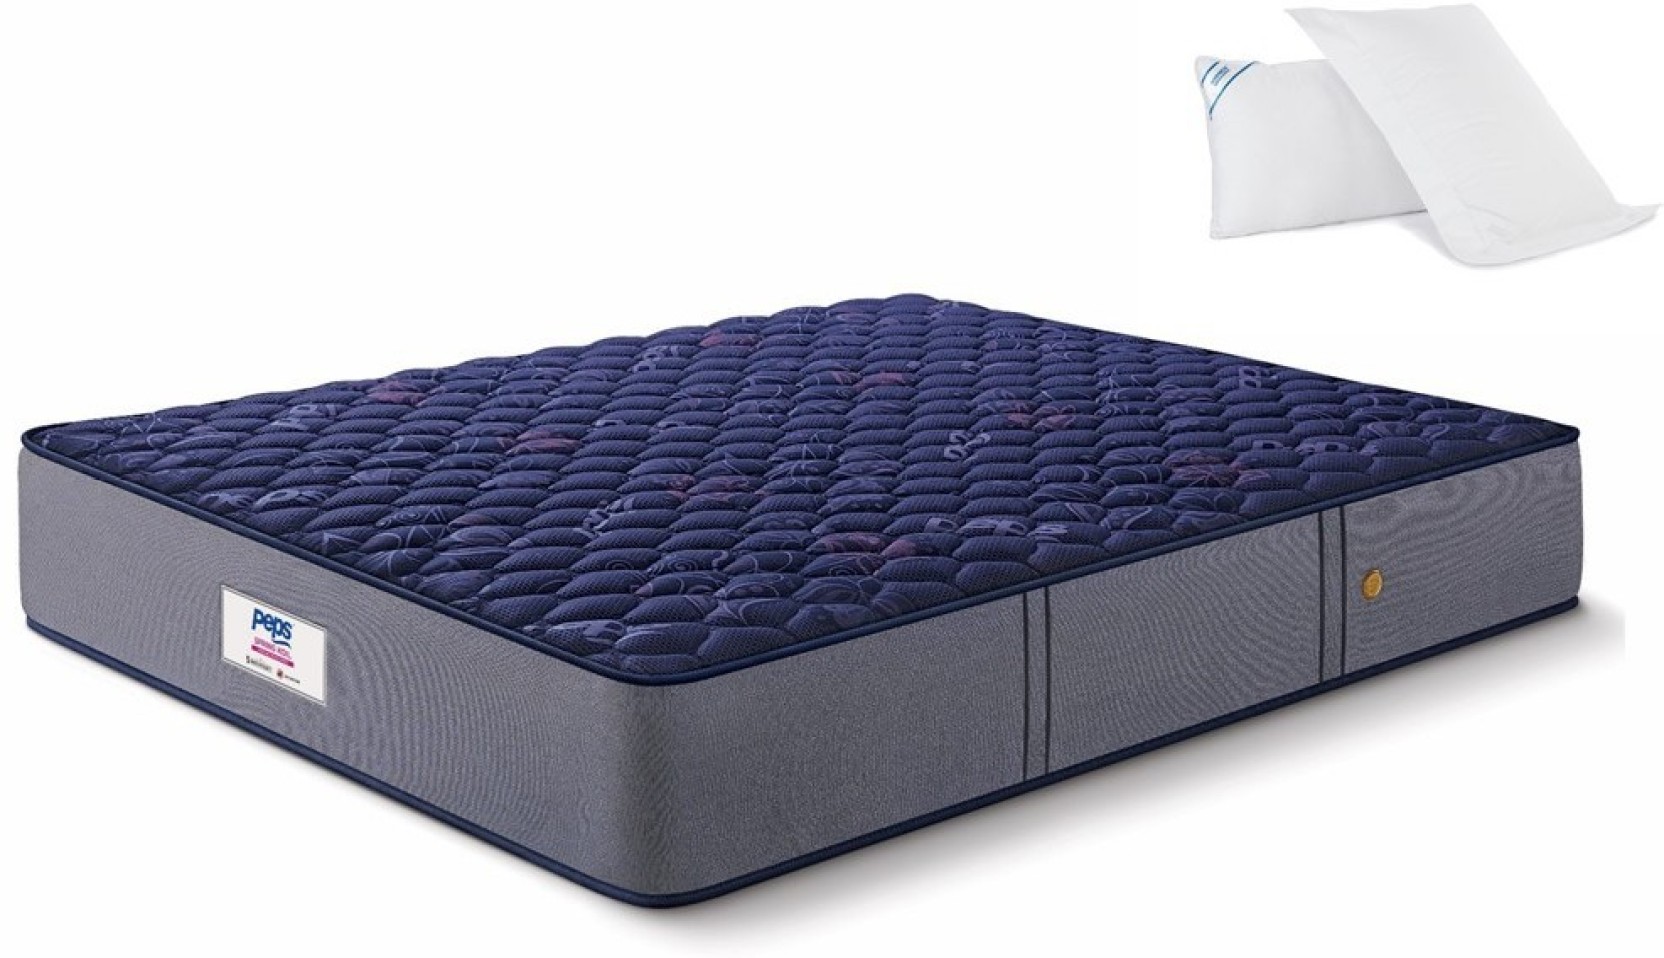 peps india mattress review